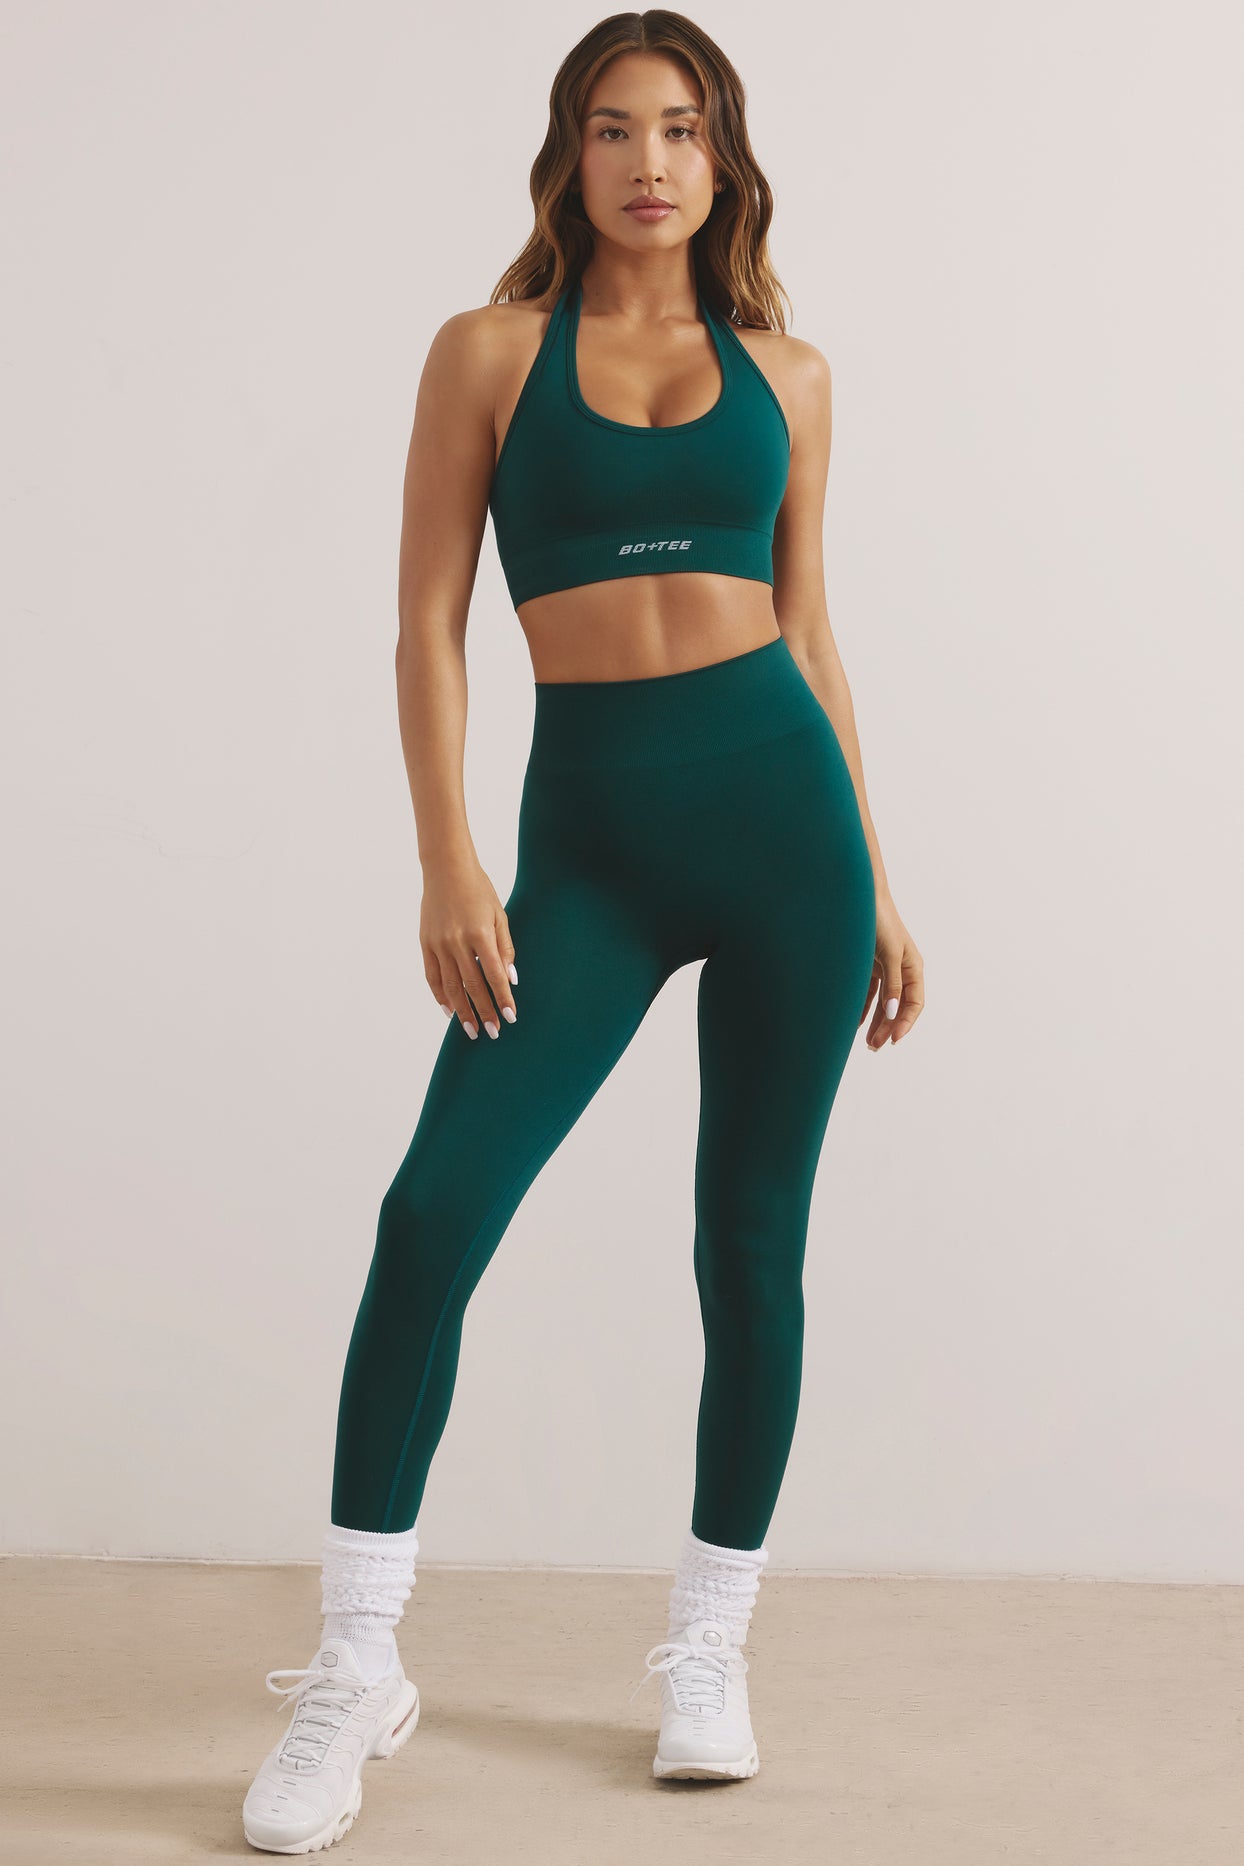 TU Size 14 Active Wear Khaki Green Ribbed Cropped Leggings Gym Pants Sports  NEW